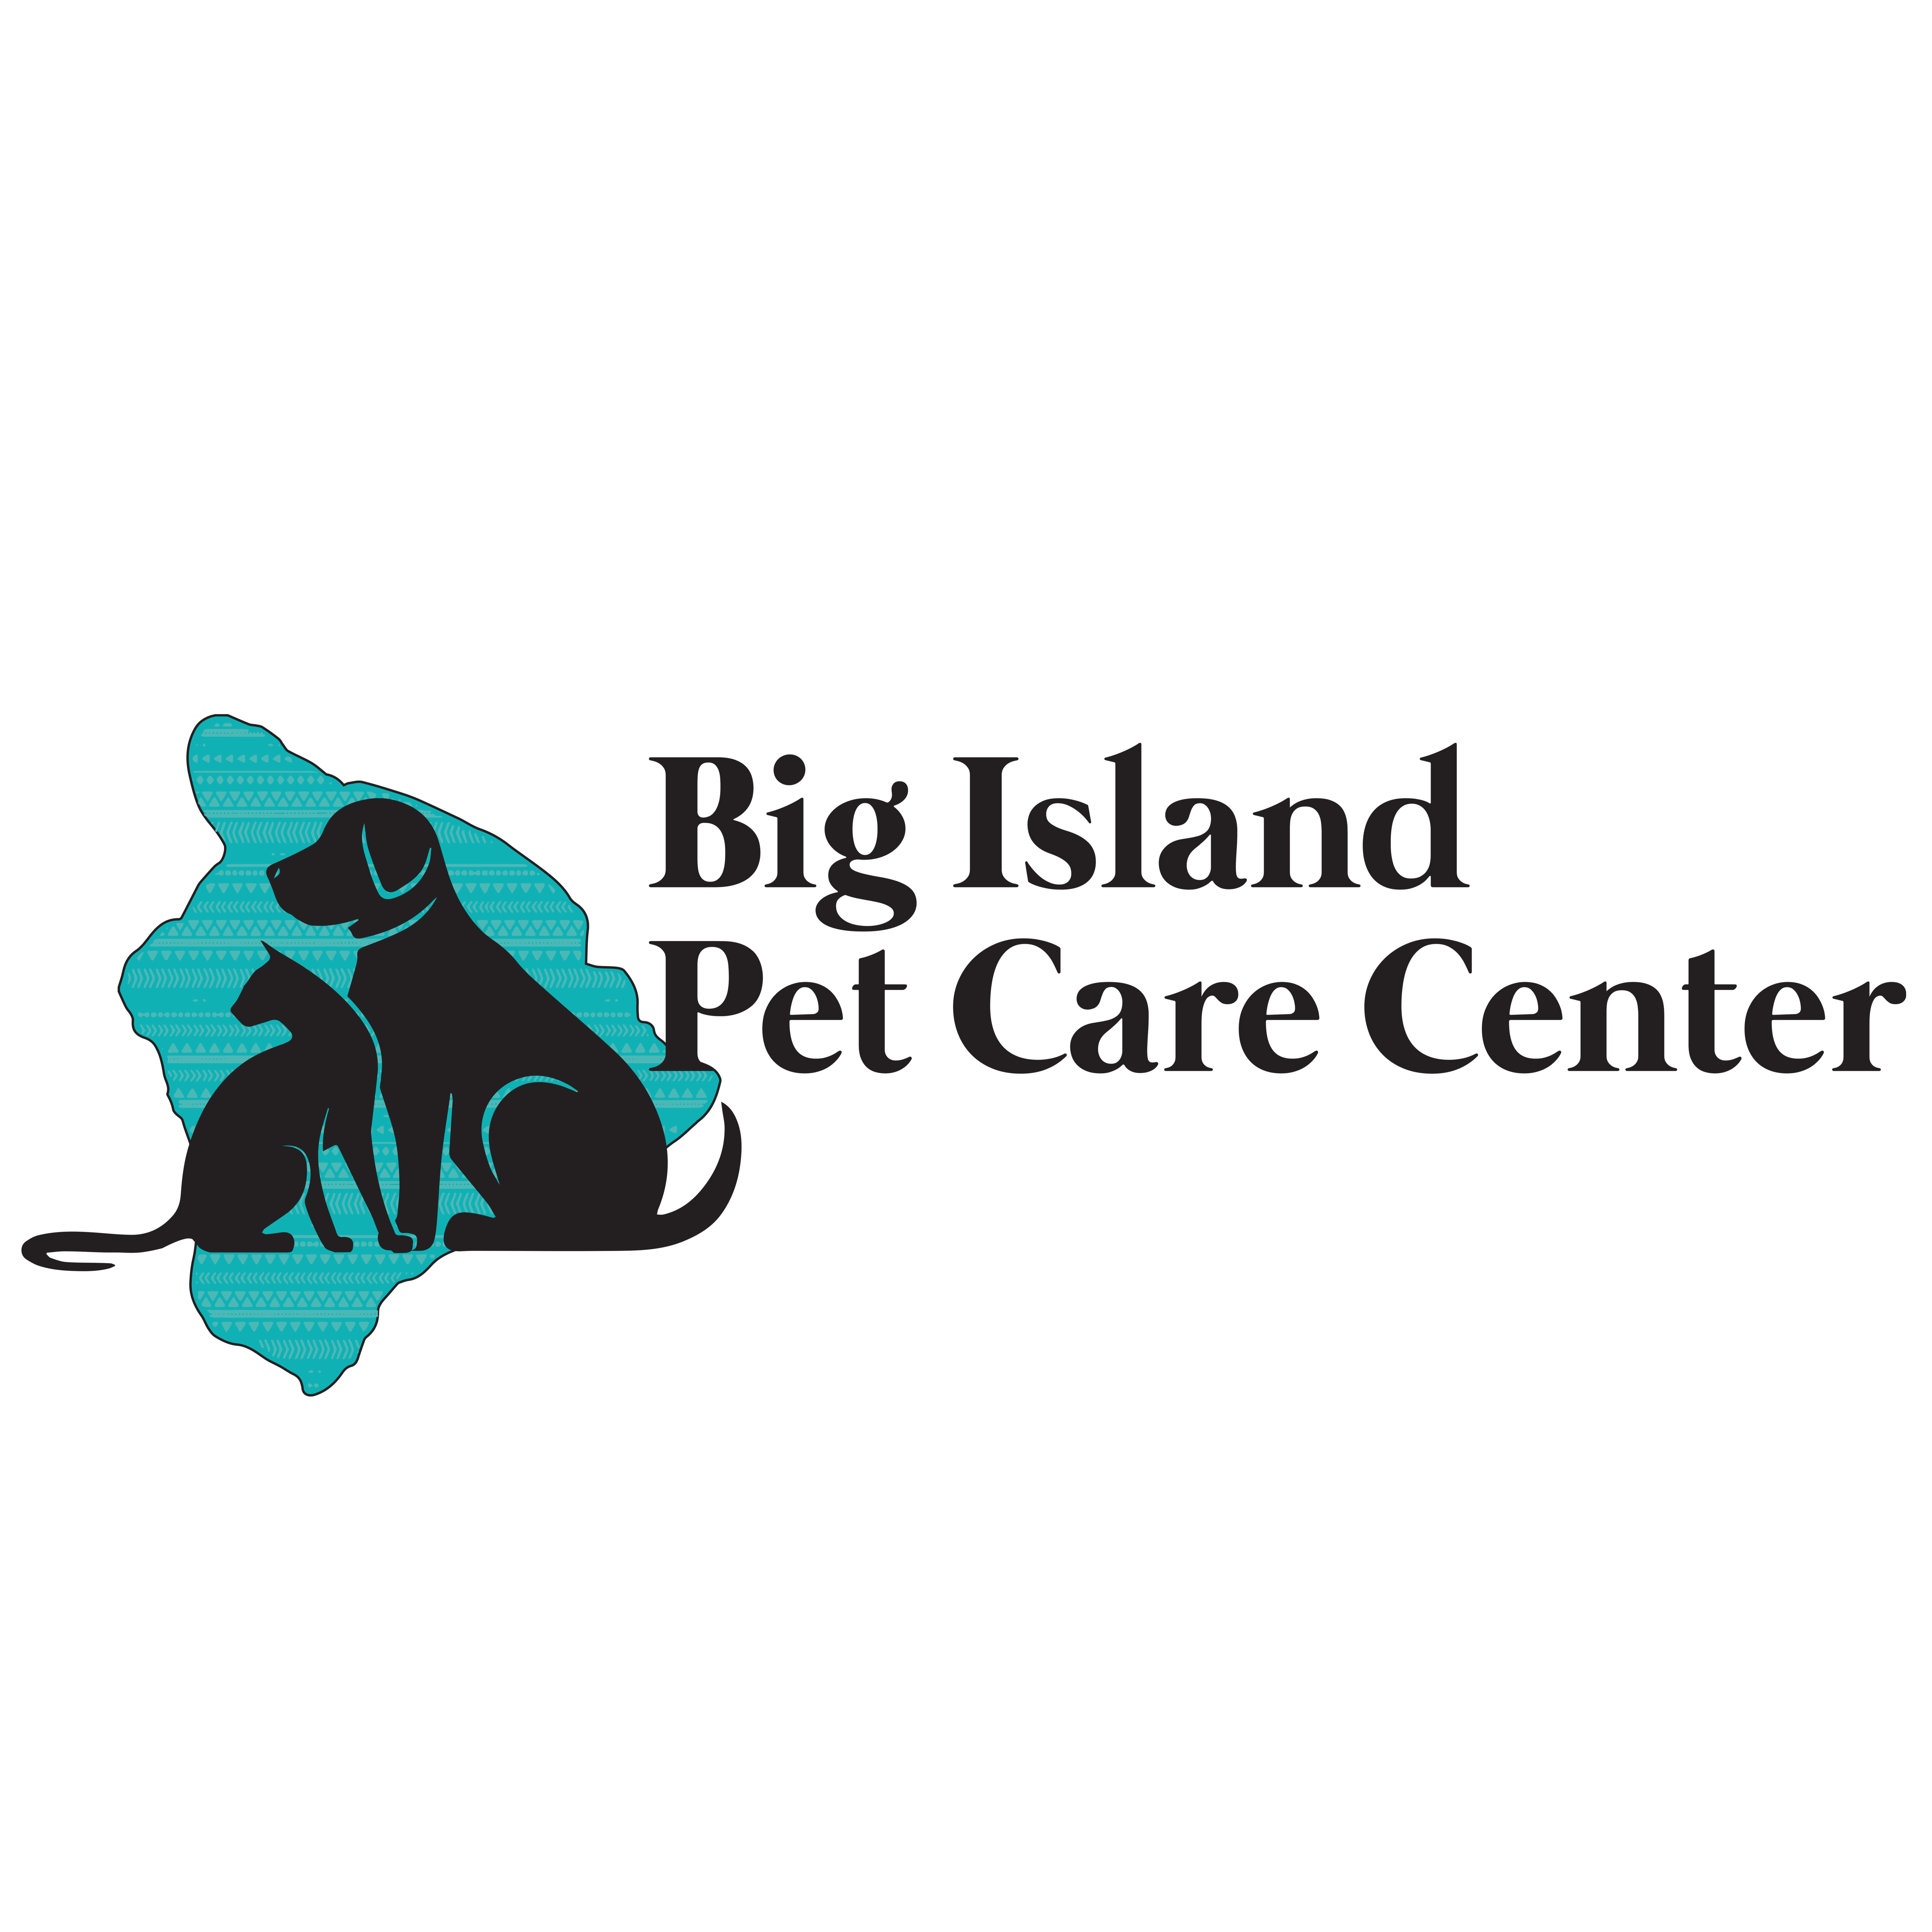 Big Island Pet Care Center Keaau - Keaau, HI 96749 - (808)966-5402 | ShowMeLocal.com